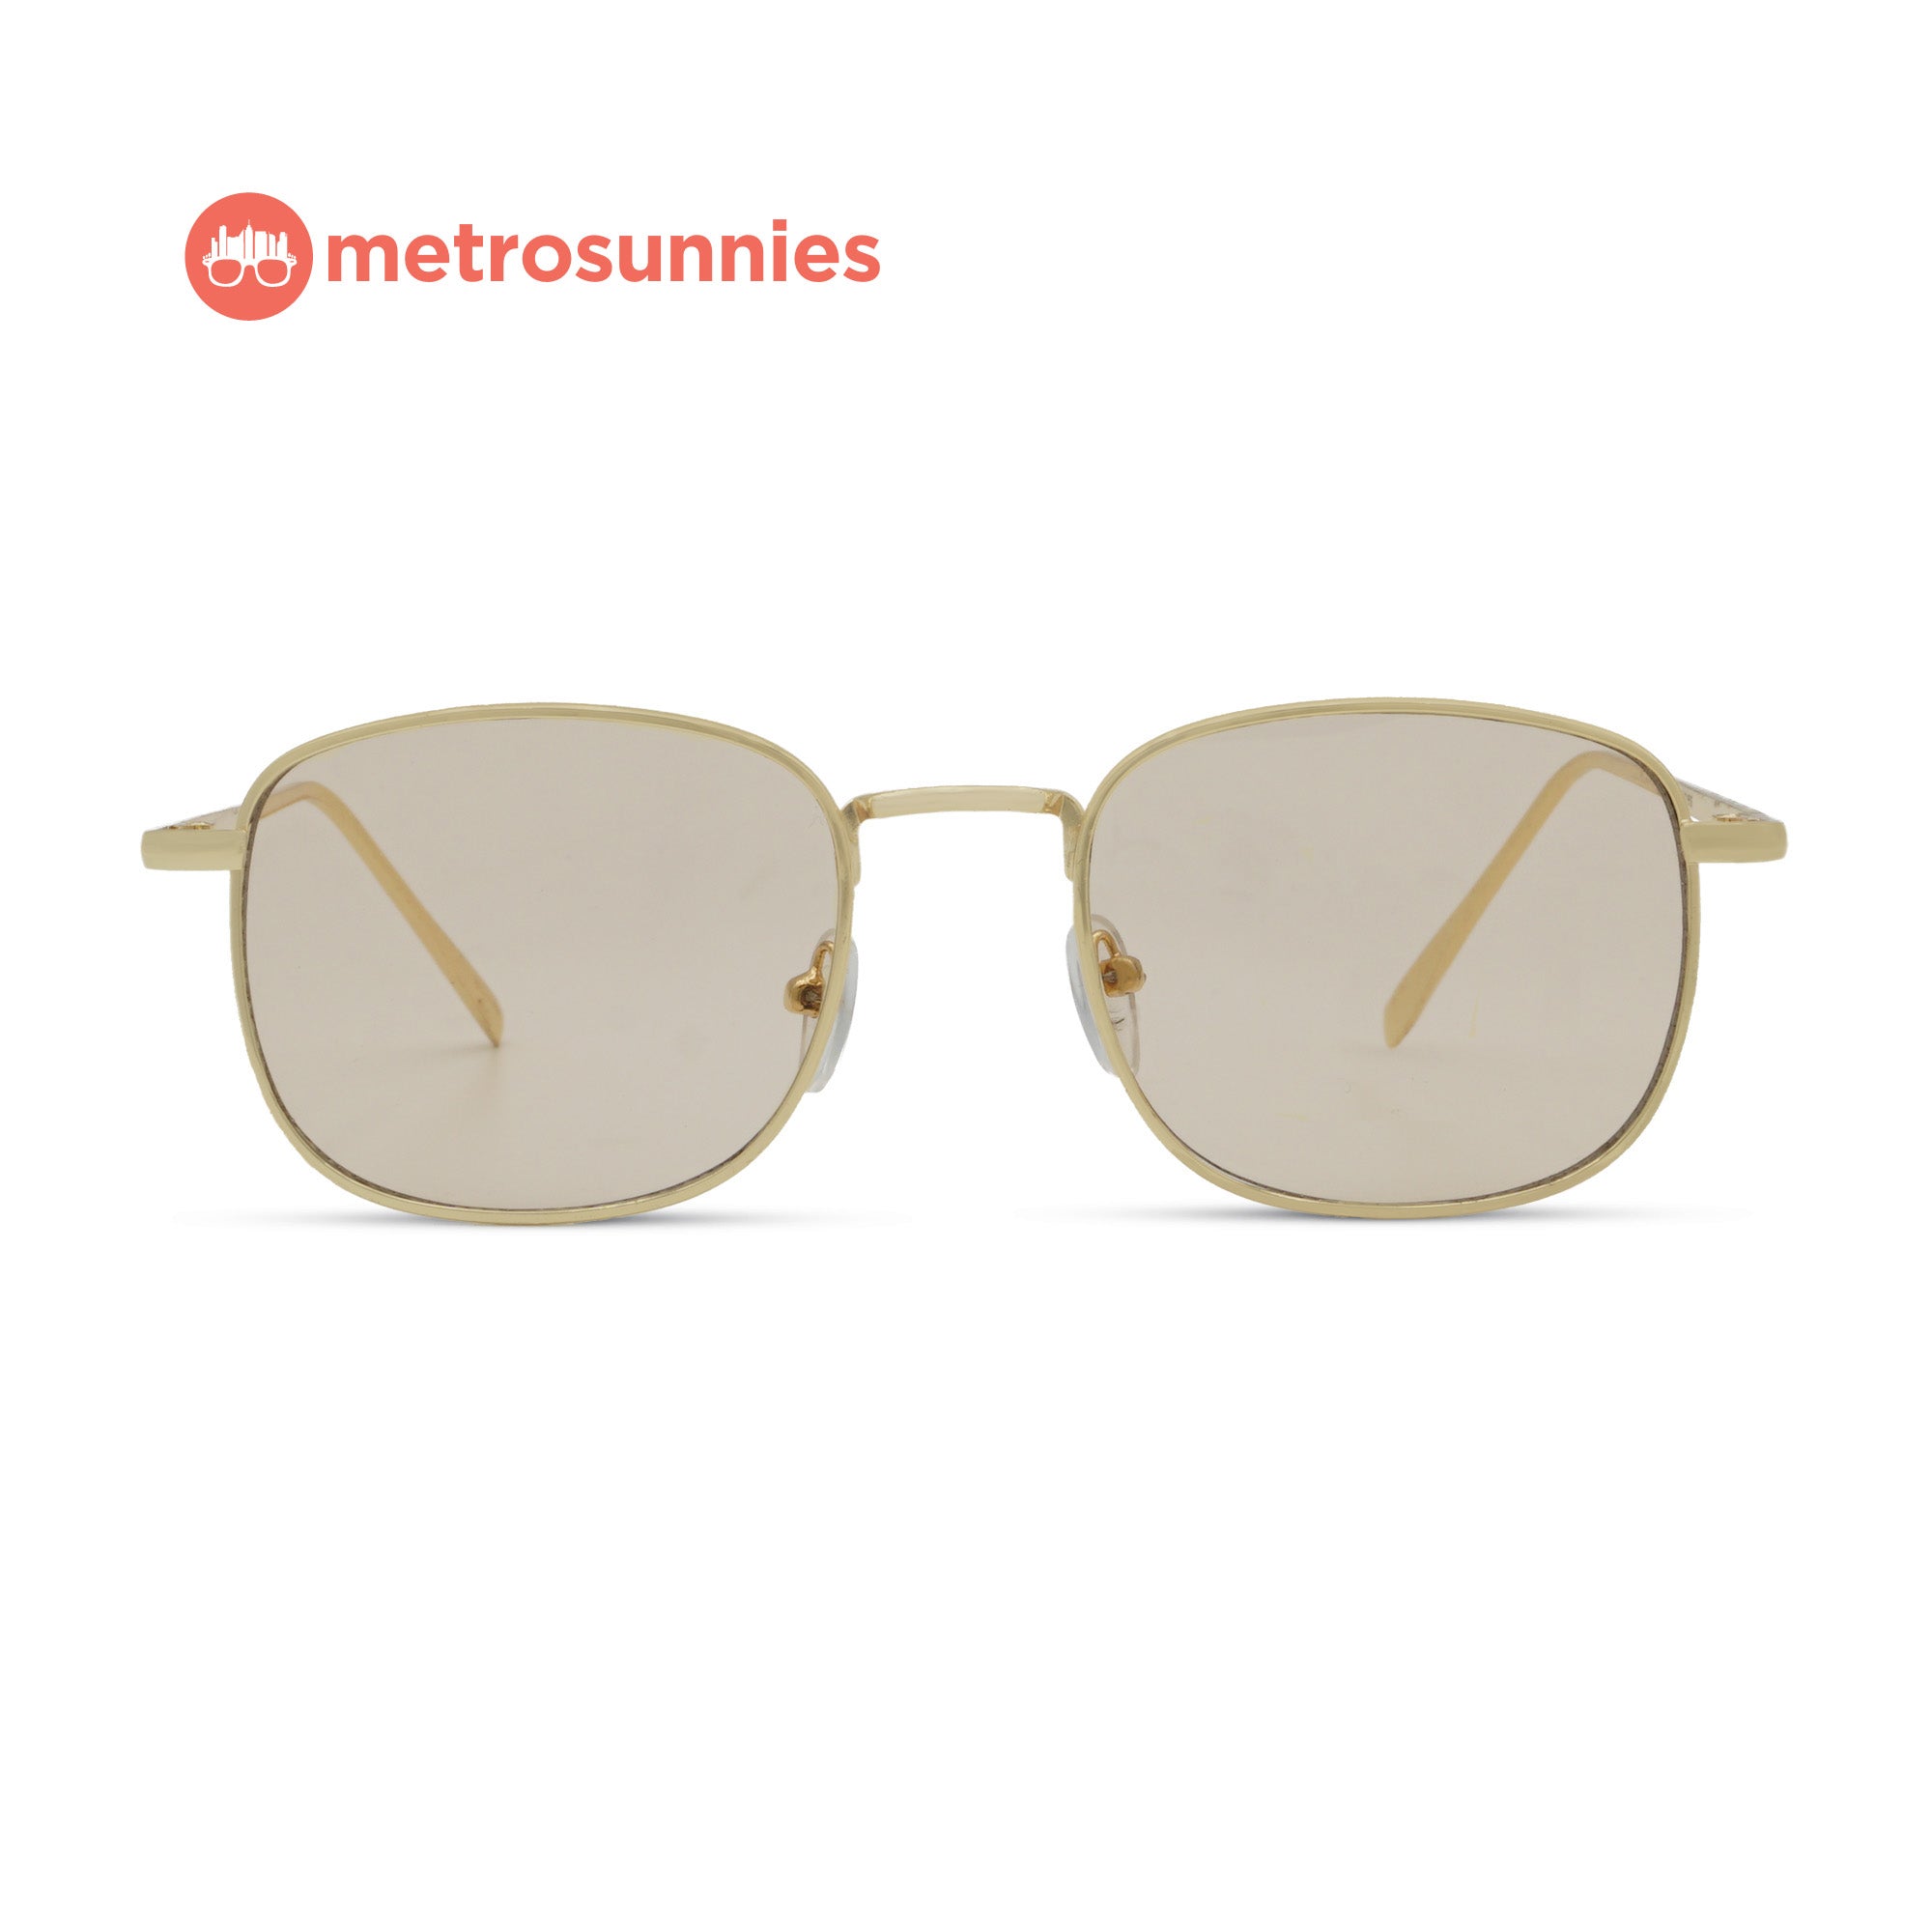 MetroSunnies Gabby Sunnies (Beige) / Sunglasses with UV400 Protection / Fashion Eyewear Unisex